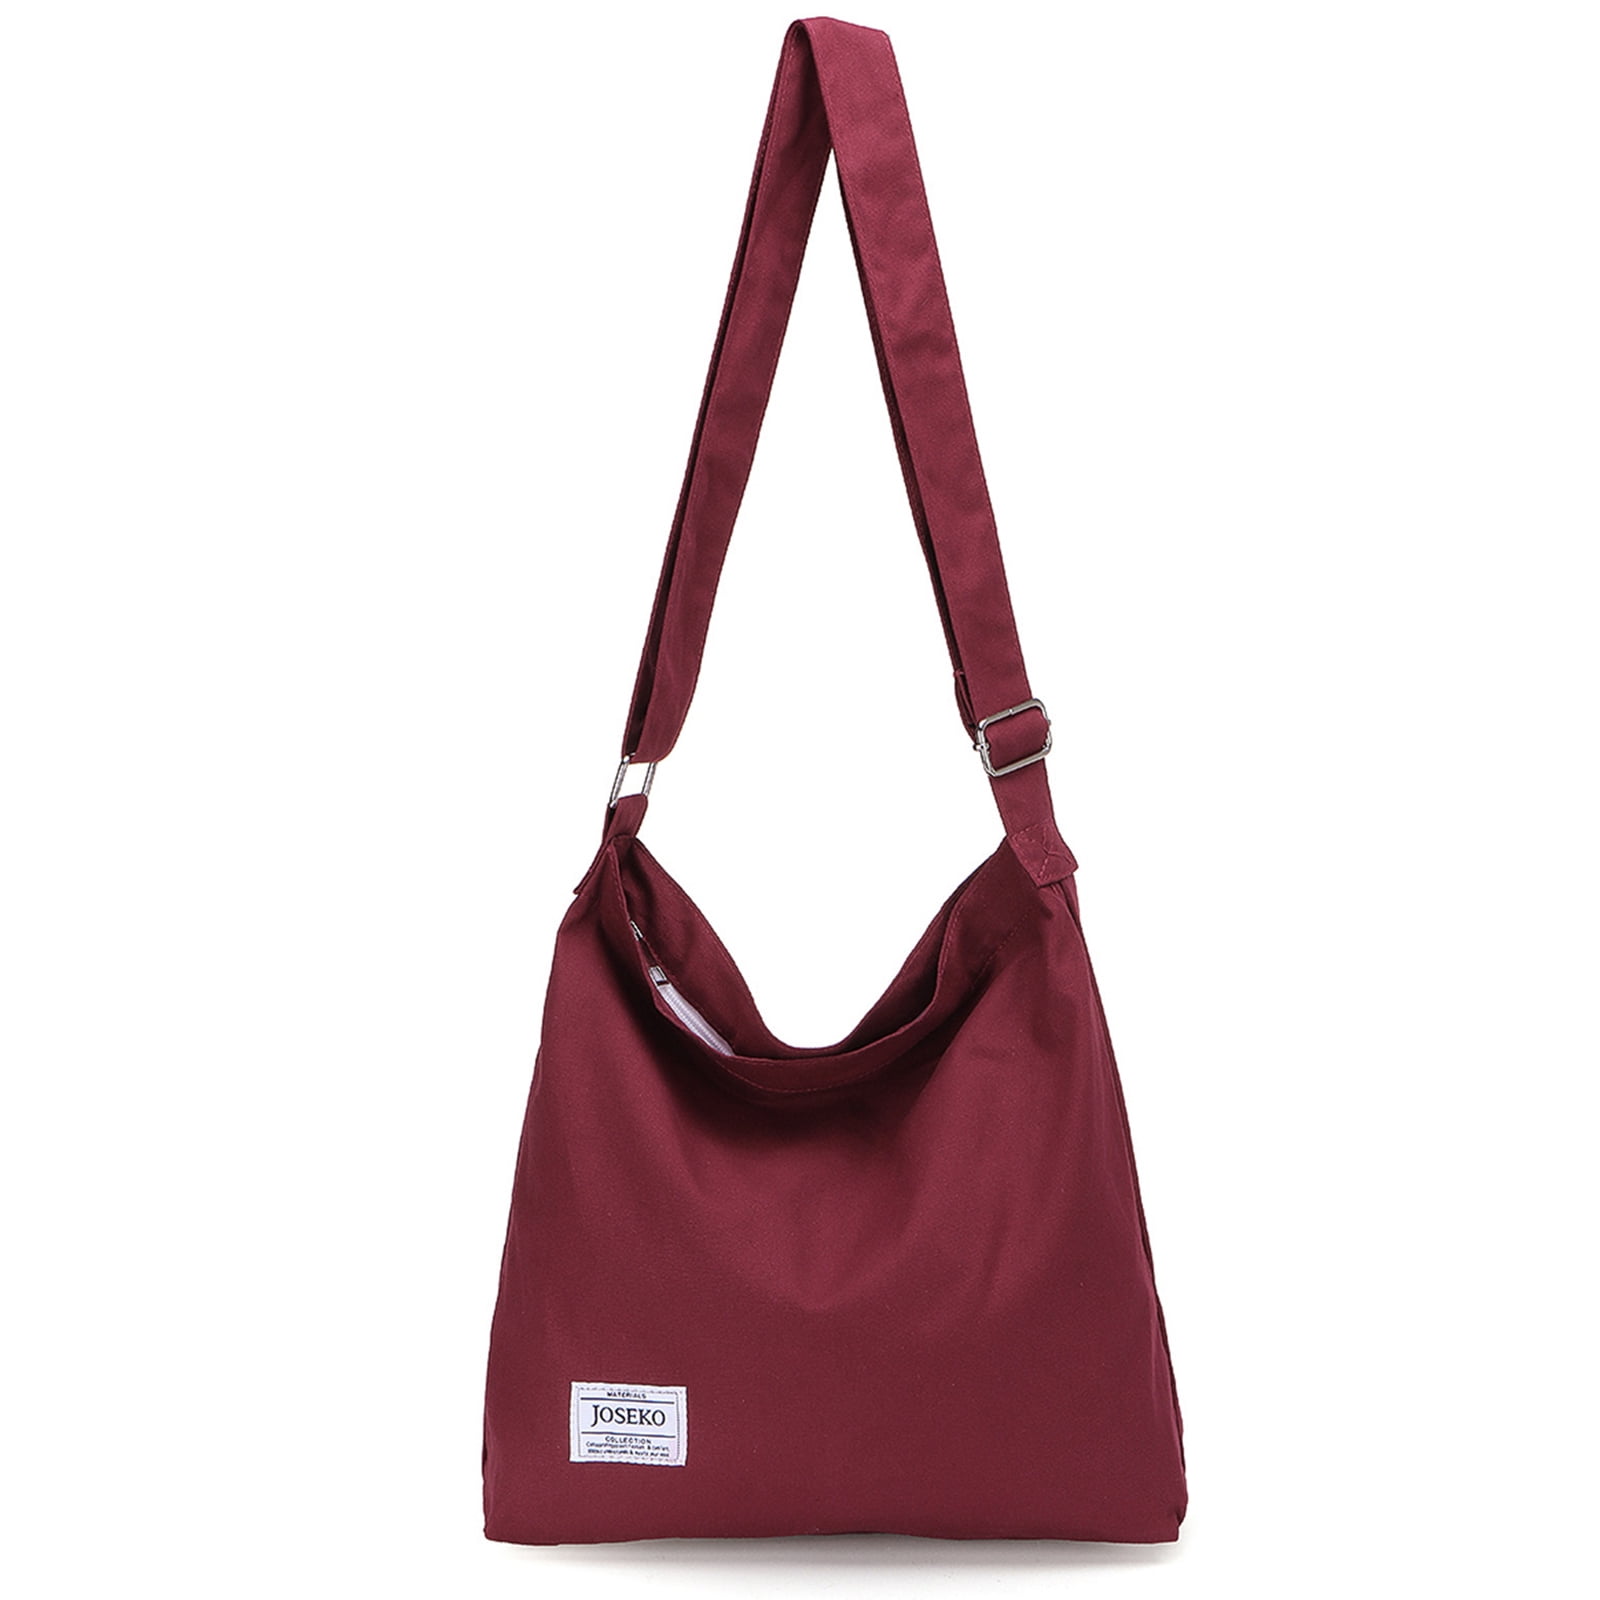 Portable Shoulder Bags Eco Shopping Bag Shopping Hiking Travel Oxford Cloth J